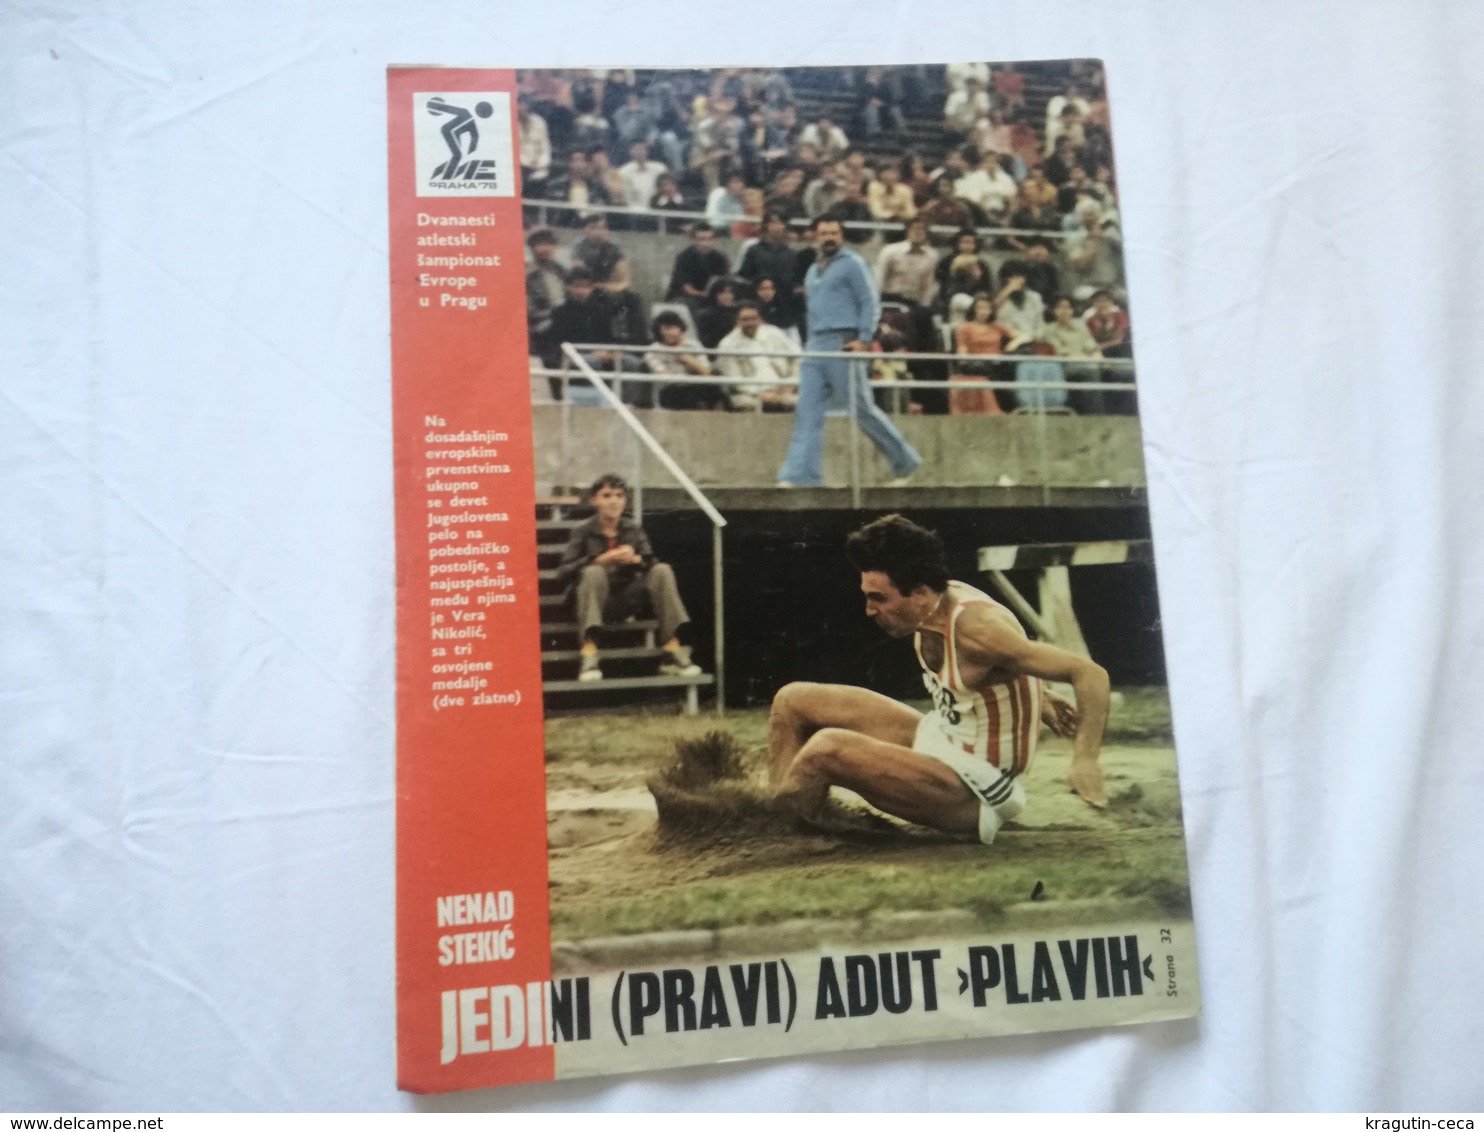 1978 TEMPO YUGOSLAVIA SERBIA SPORT FOOTBALL MAGAZINE NEWSPAPERS Steve Zungul HAJDUK PARTIZAN SANTRAC STEKIC ATHLETICS